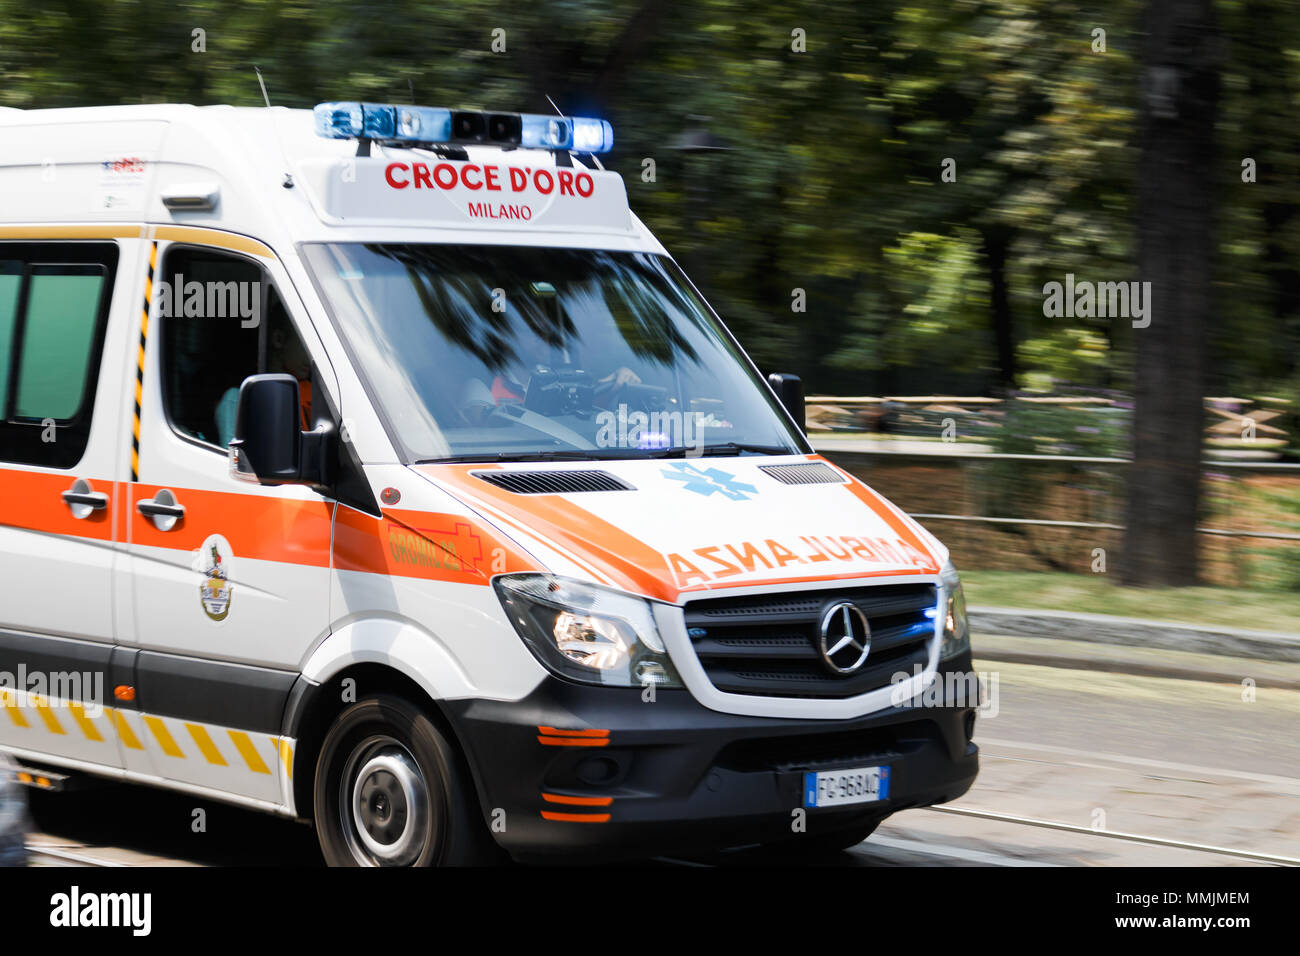 An Italian ambulance speeding through traffic in daytime. Stock Photo